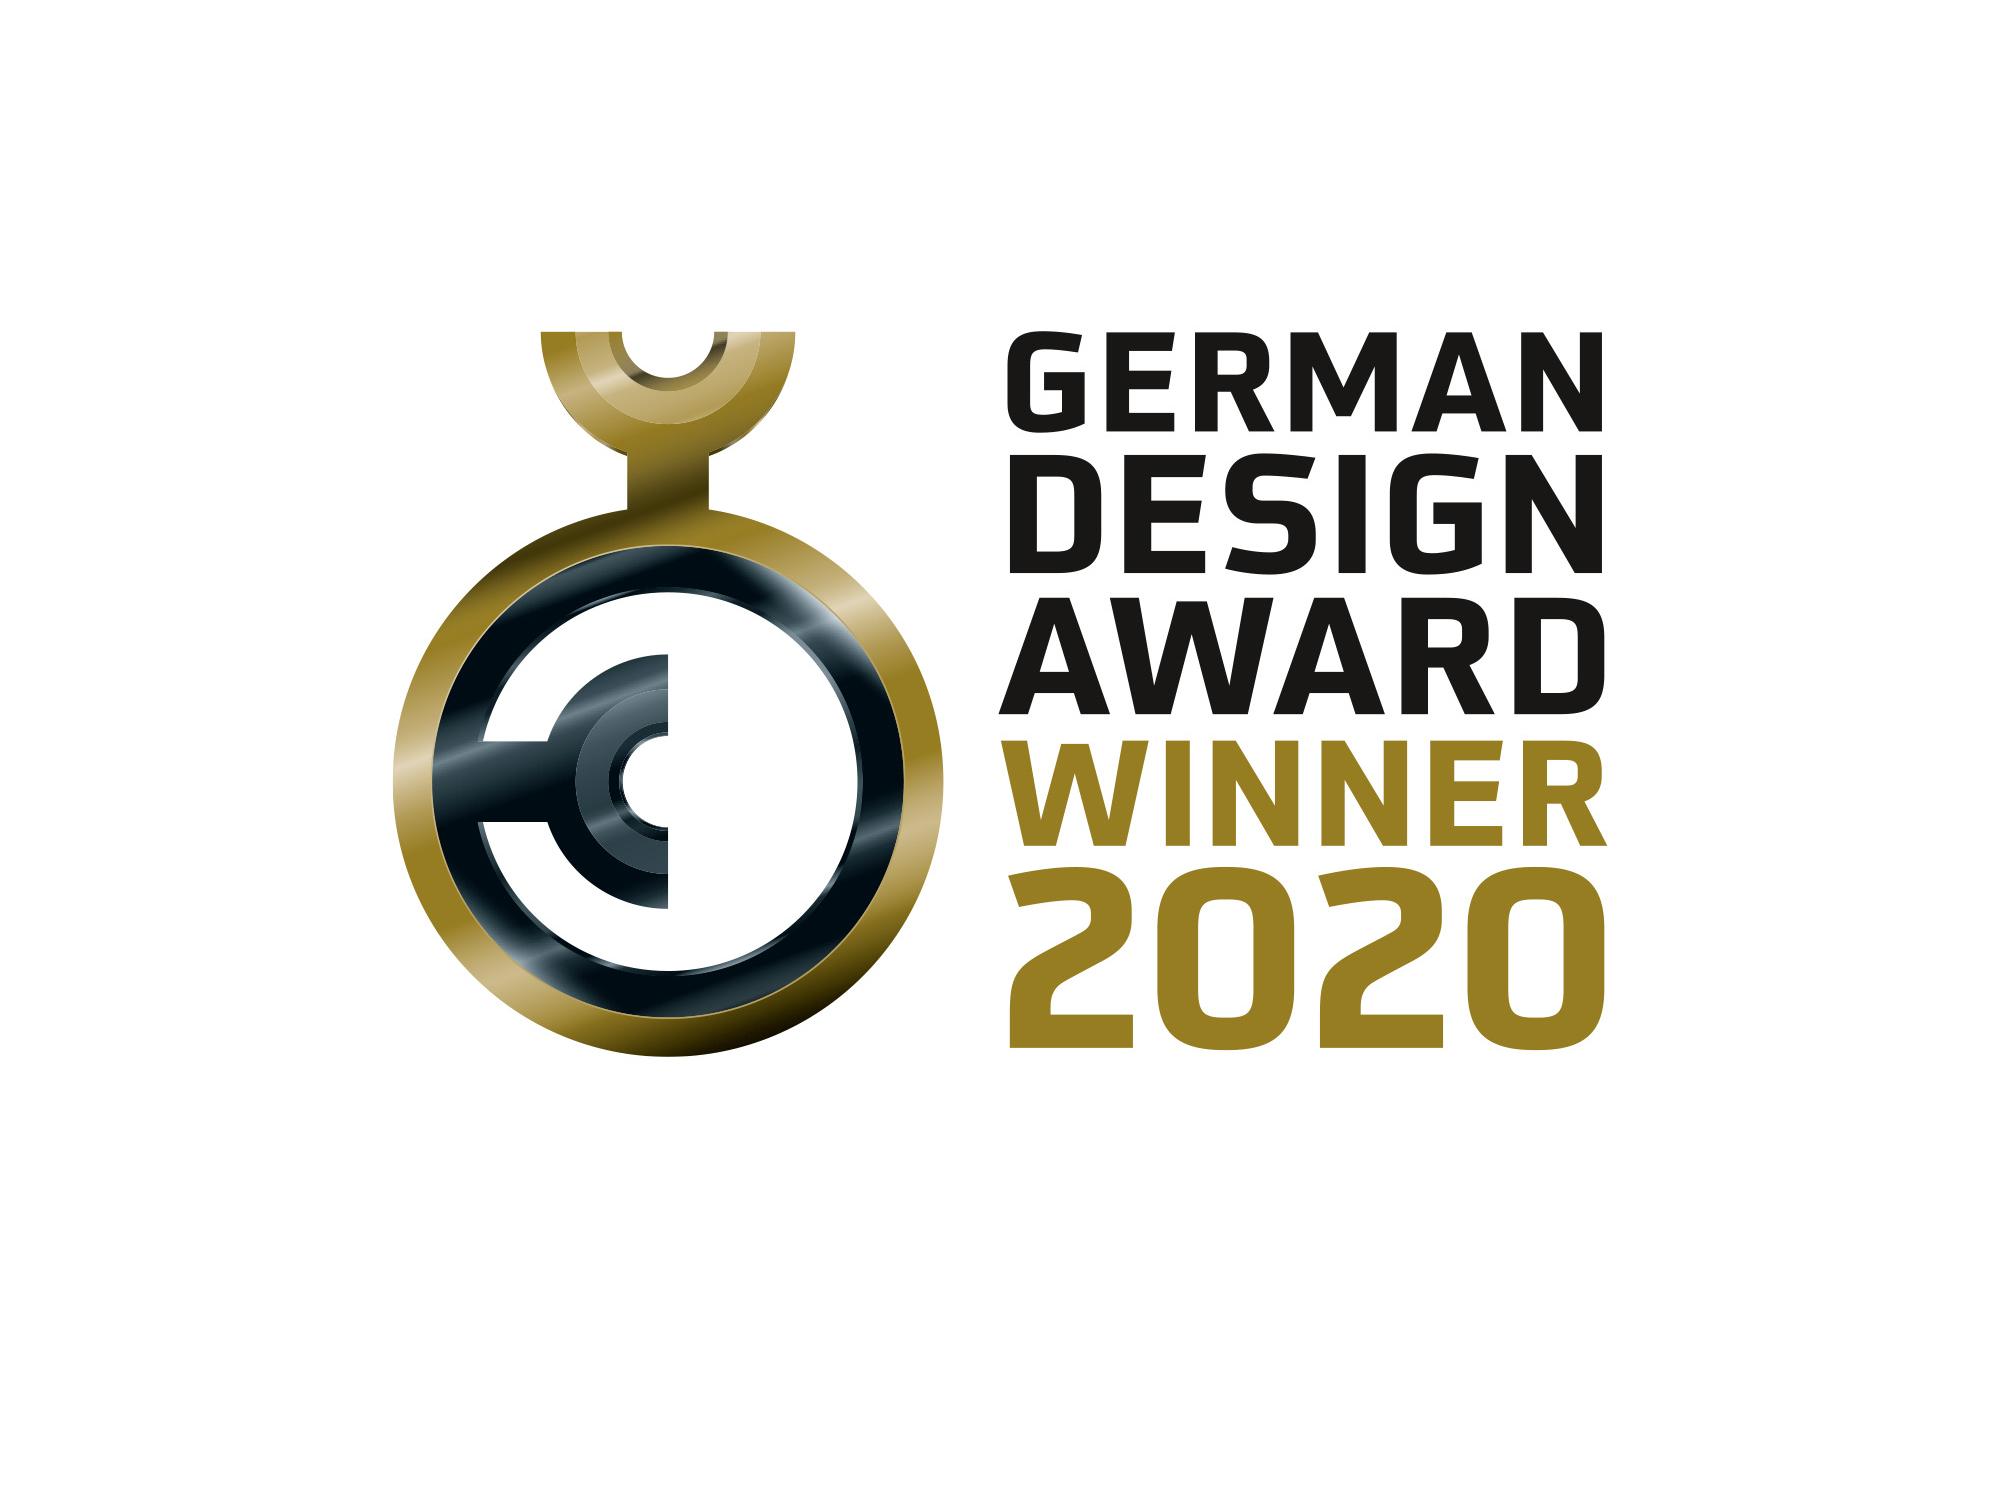 German Design Award Winner 2020 Kermi